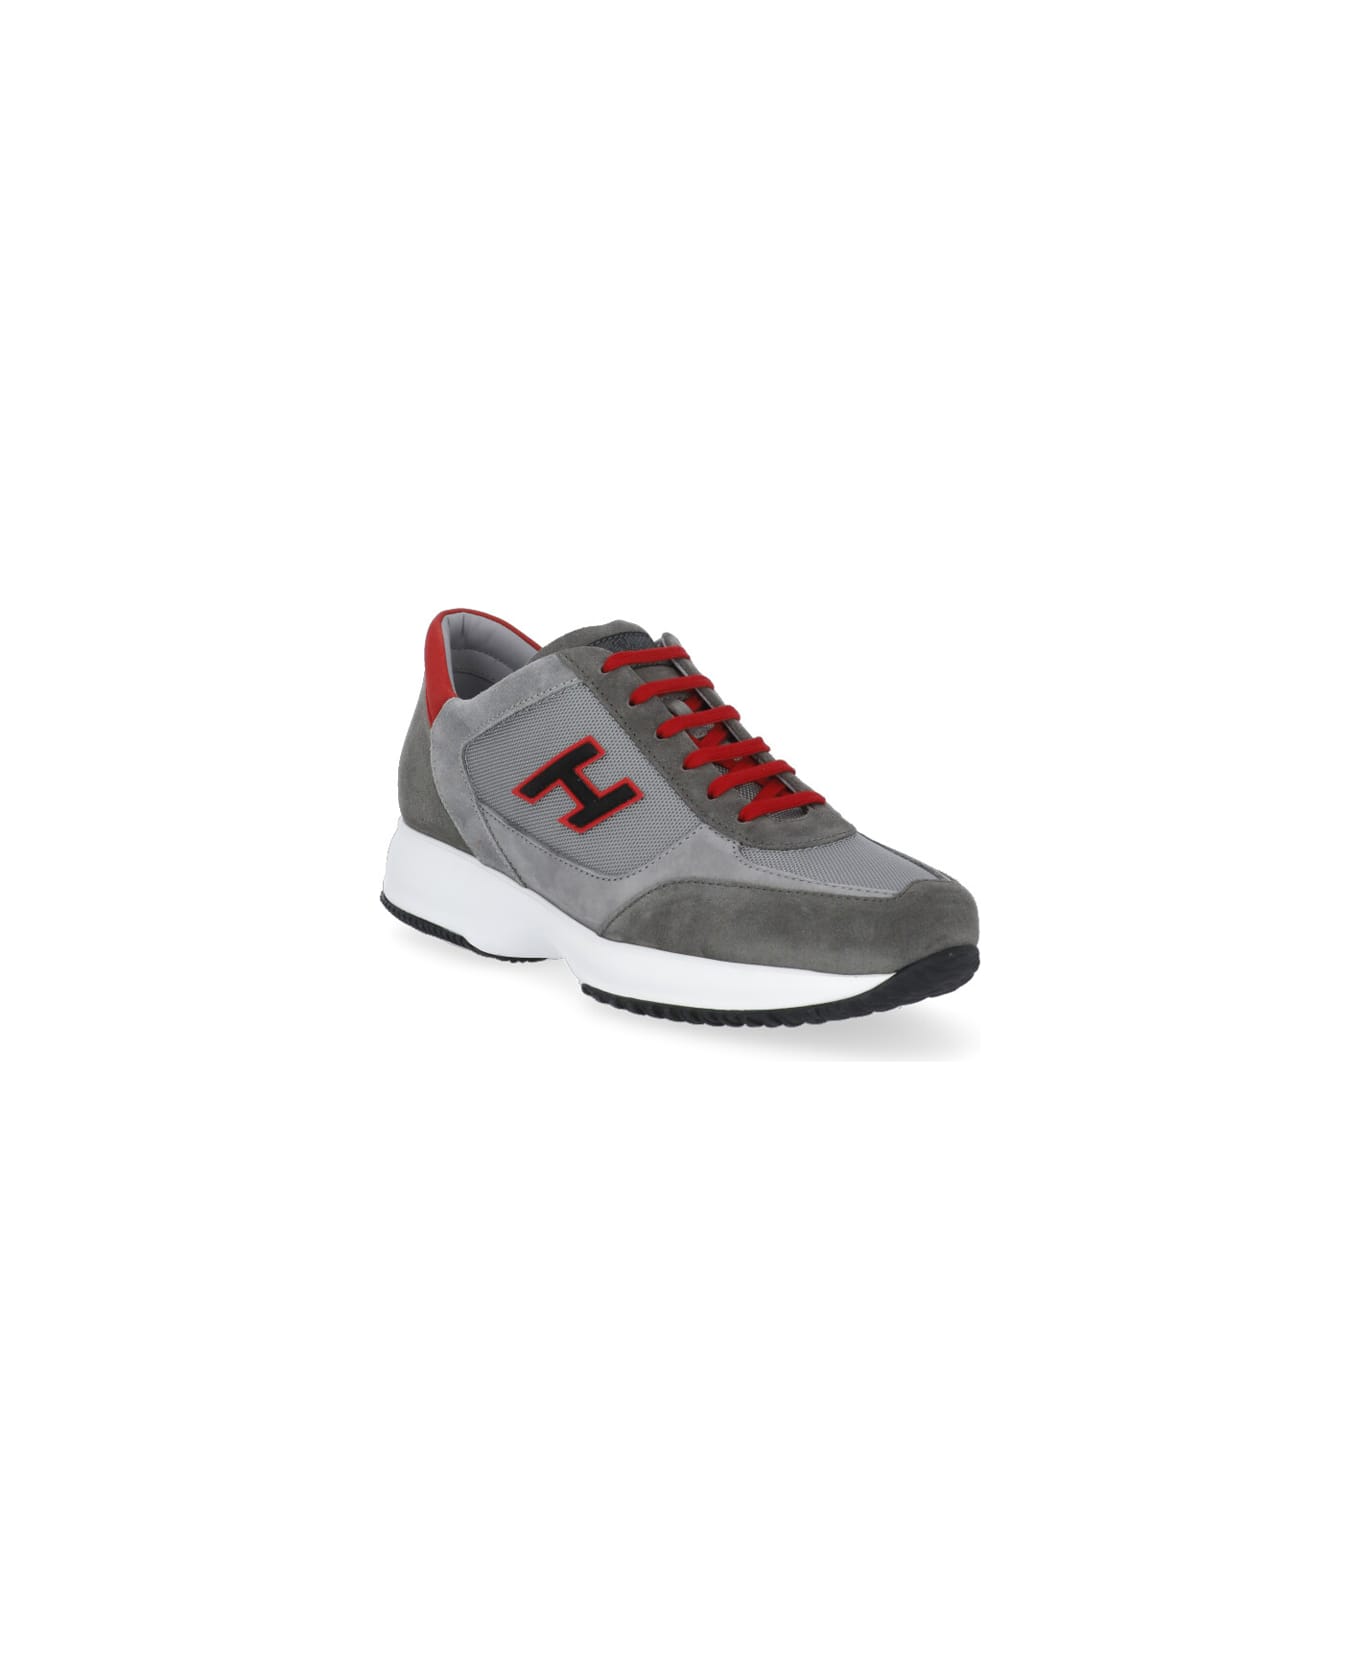 Hogan "interactive" Sneakers - Grey